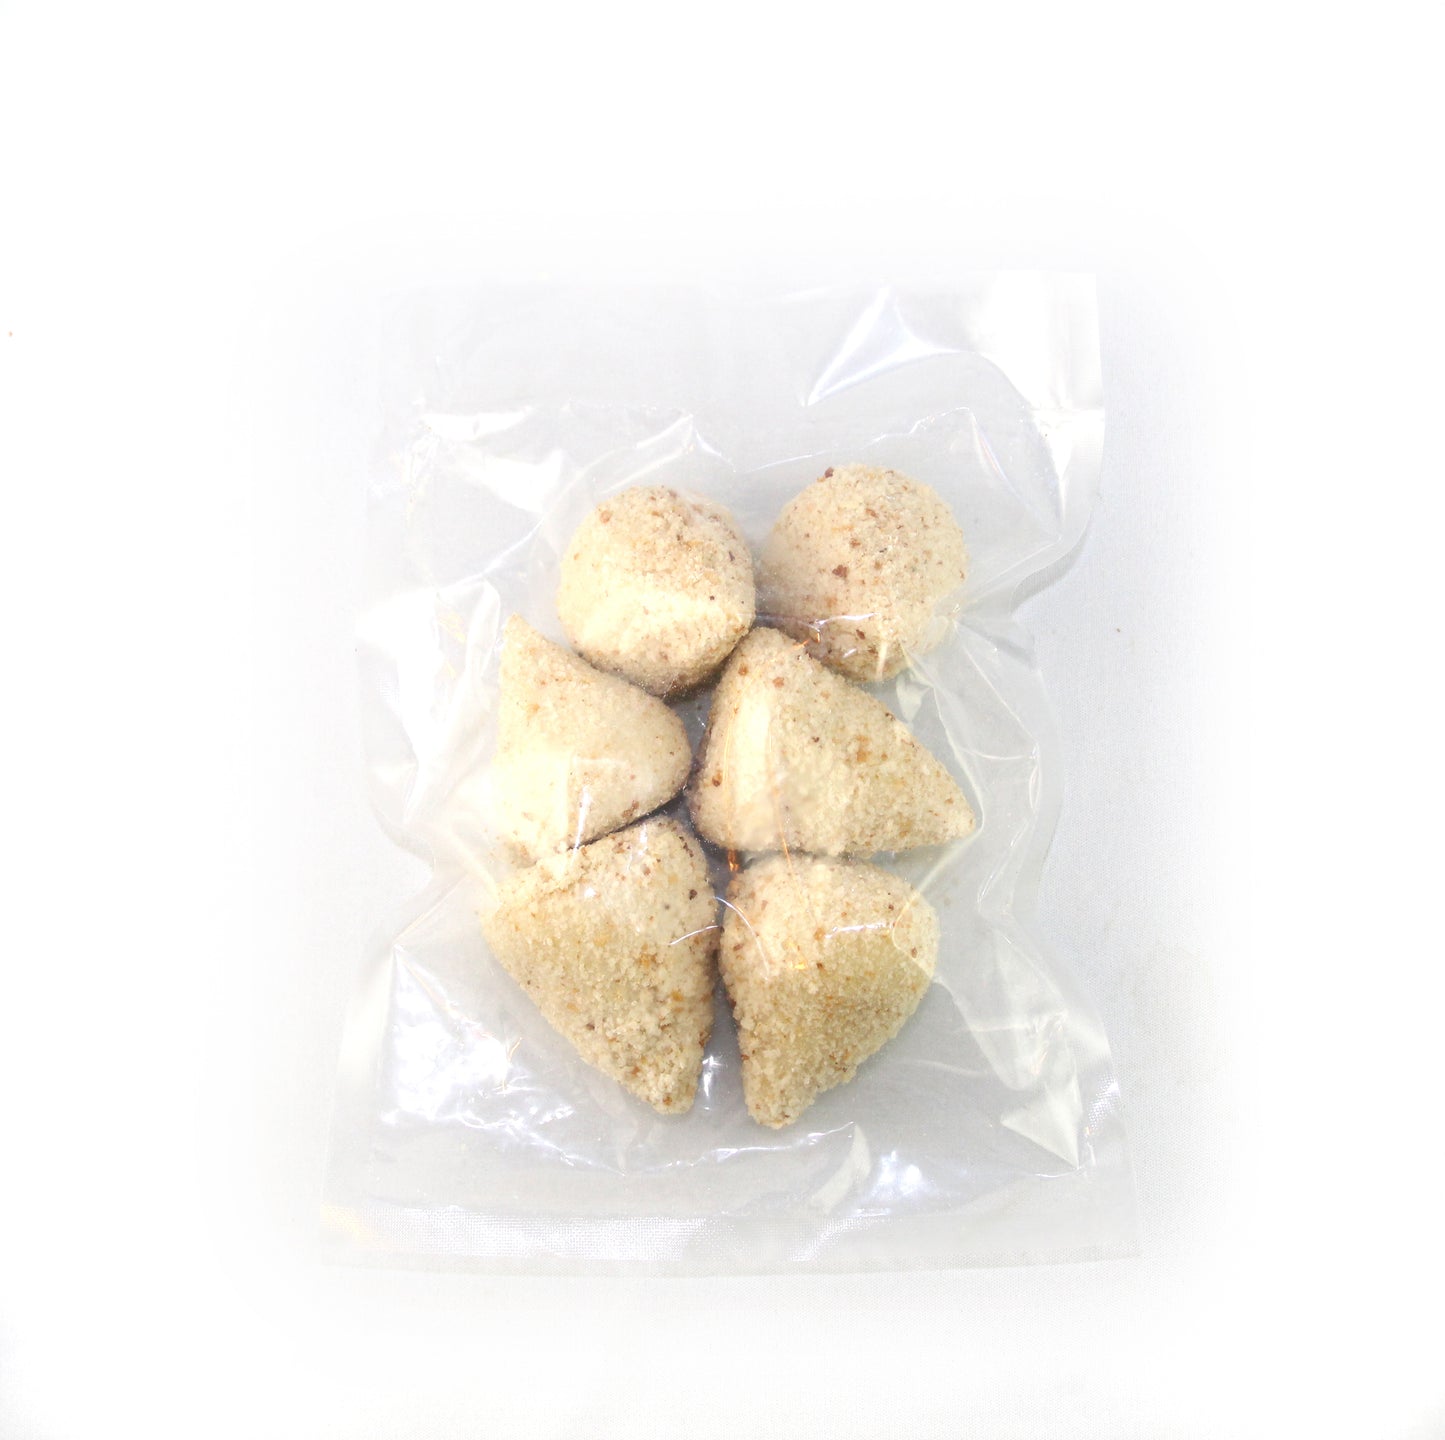 Croquette Frozen Bag | Coxinhas Congeladas Pacote